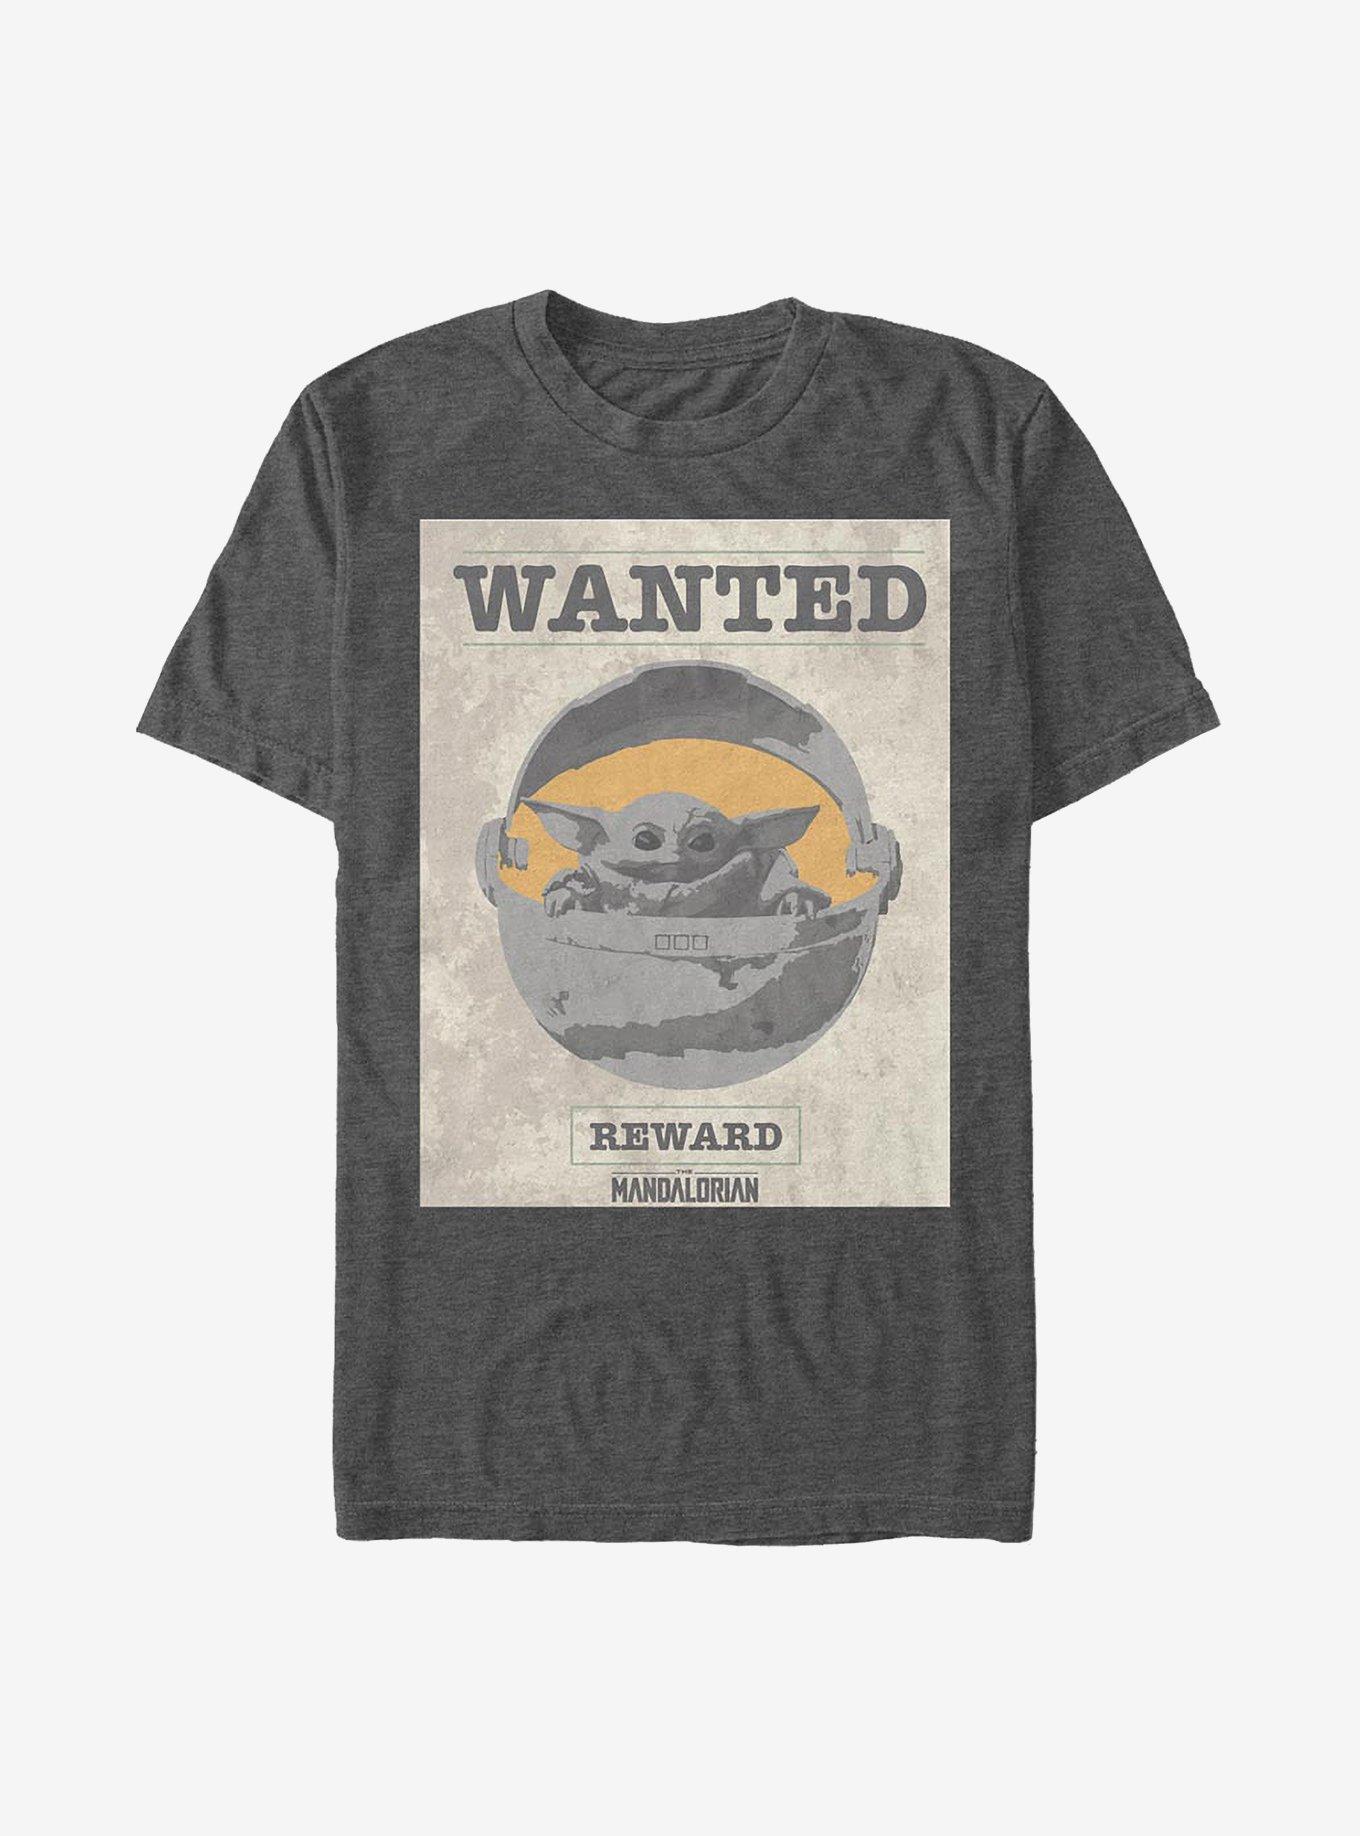 Star Wars The Mandalorian Wanted Child T-Shirt